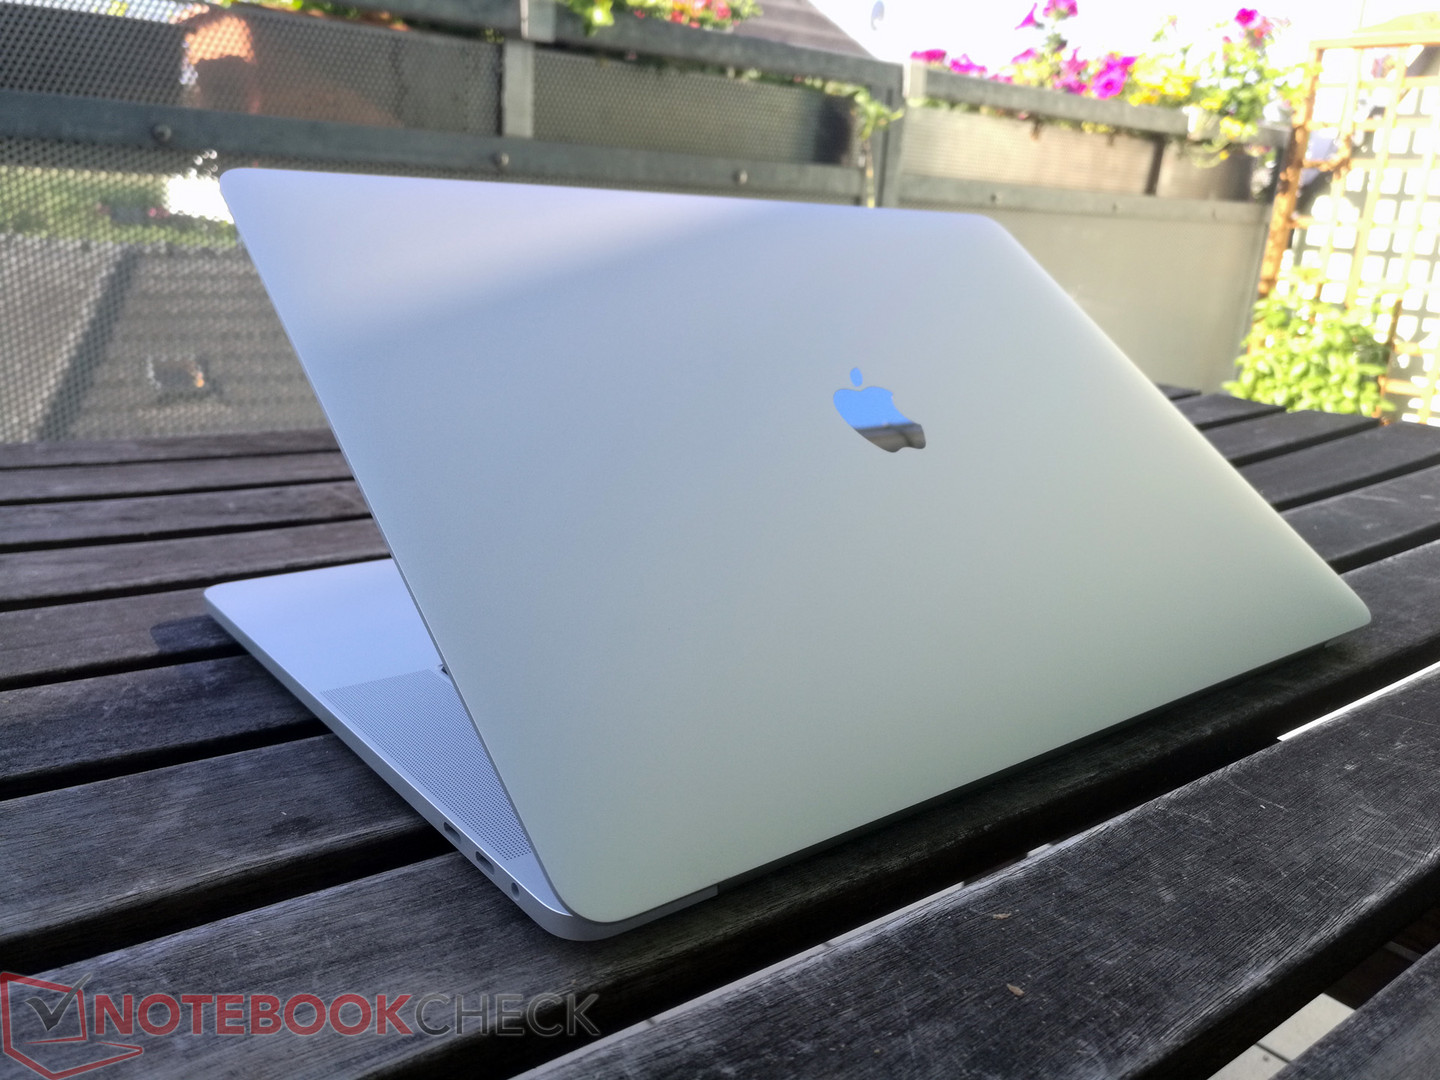 Apple macbook pro 15 notebookcheck michael wyckoff